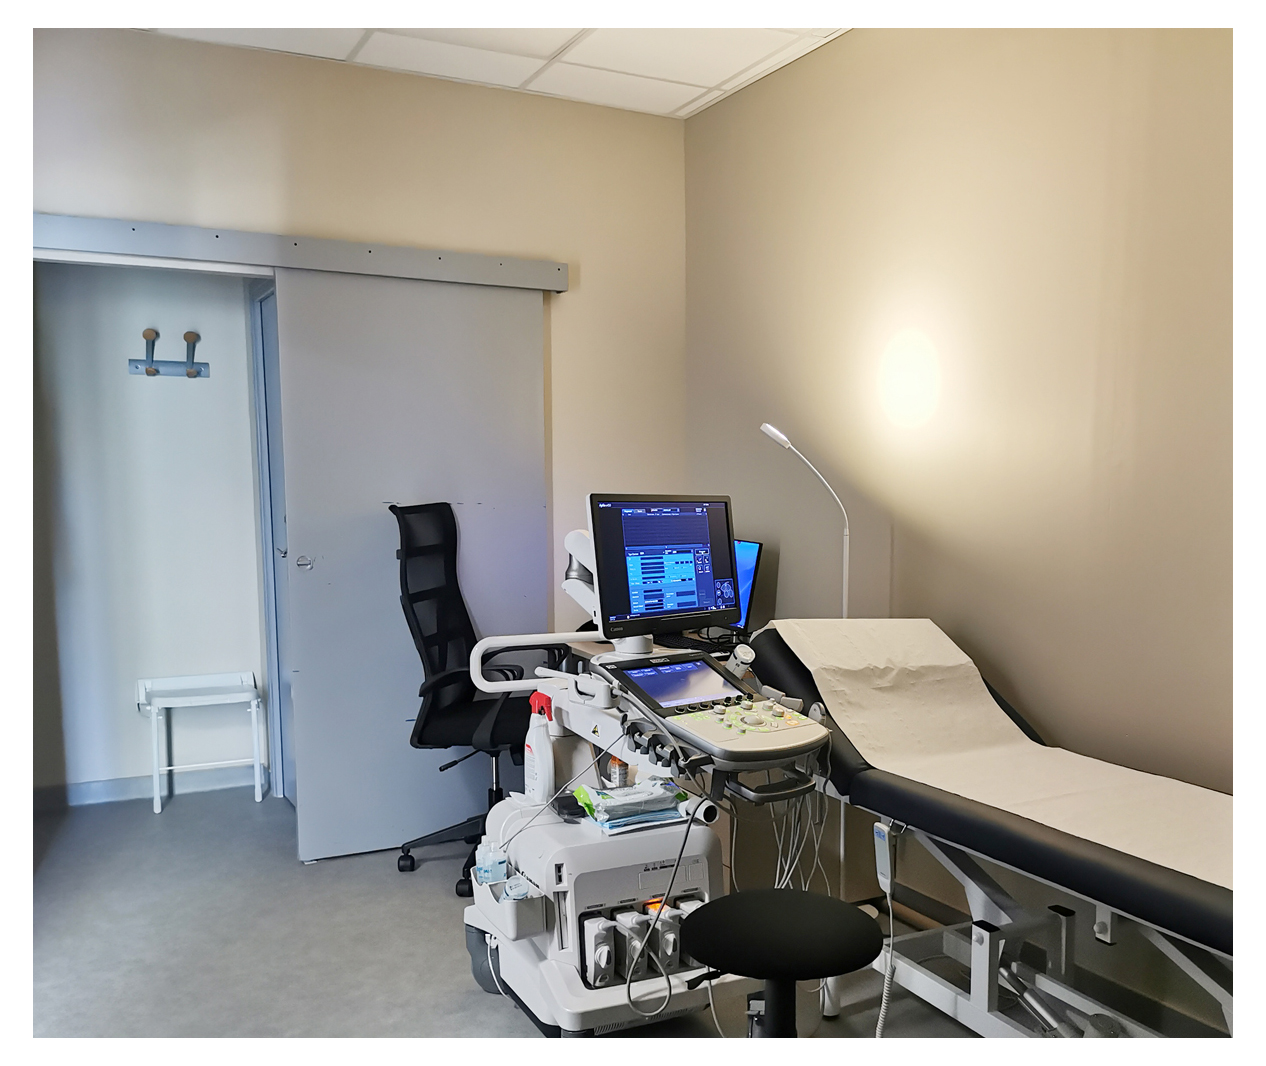 Appareil examen d'imagerie à Antibes - Echographie au Centre de radiologie